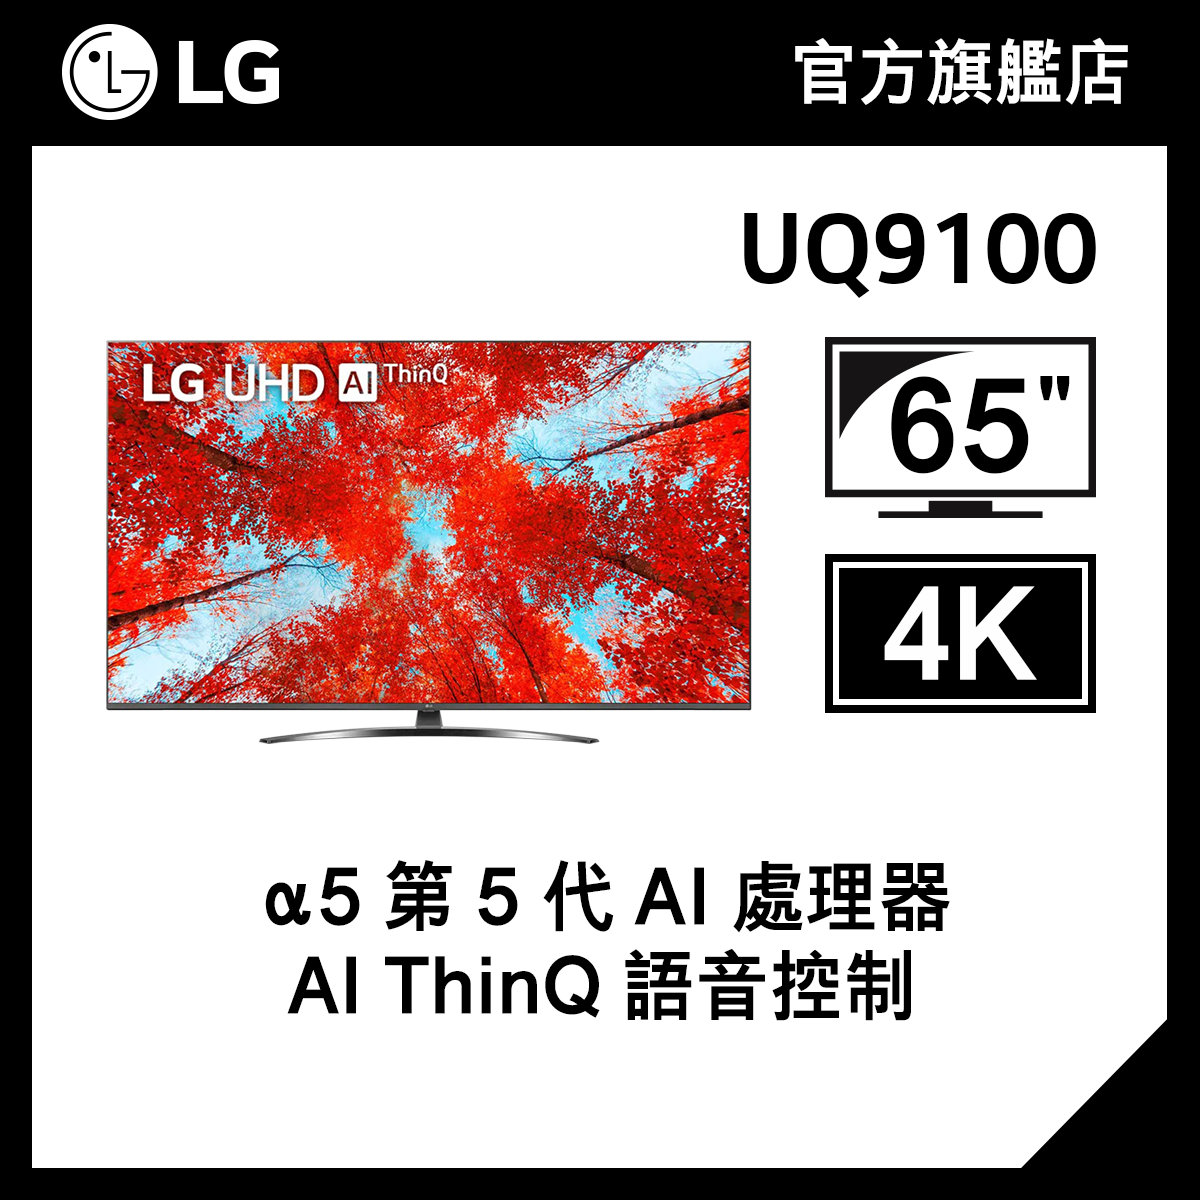 LG 65" UQ9100 UHD 4K 智能電視